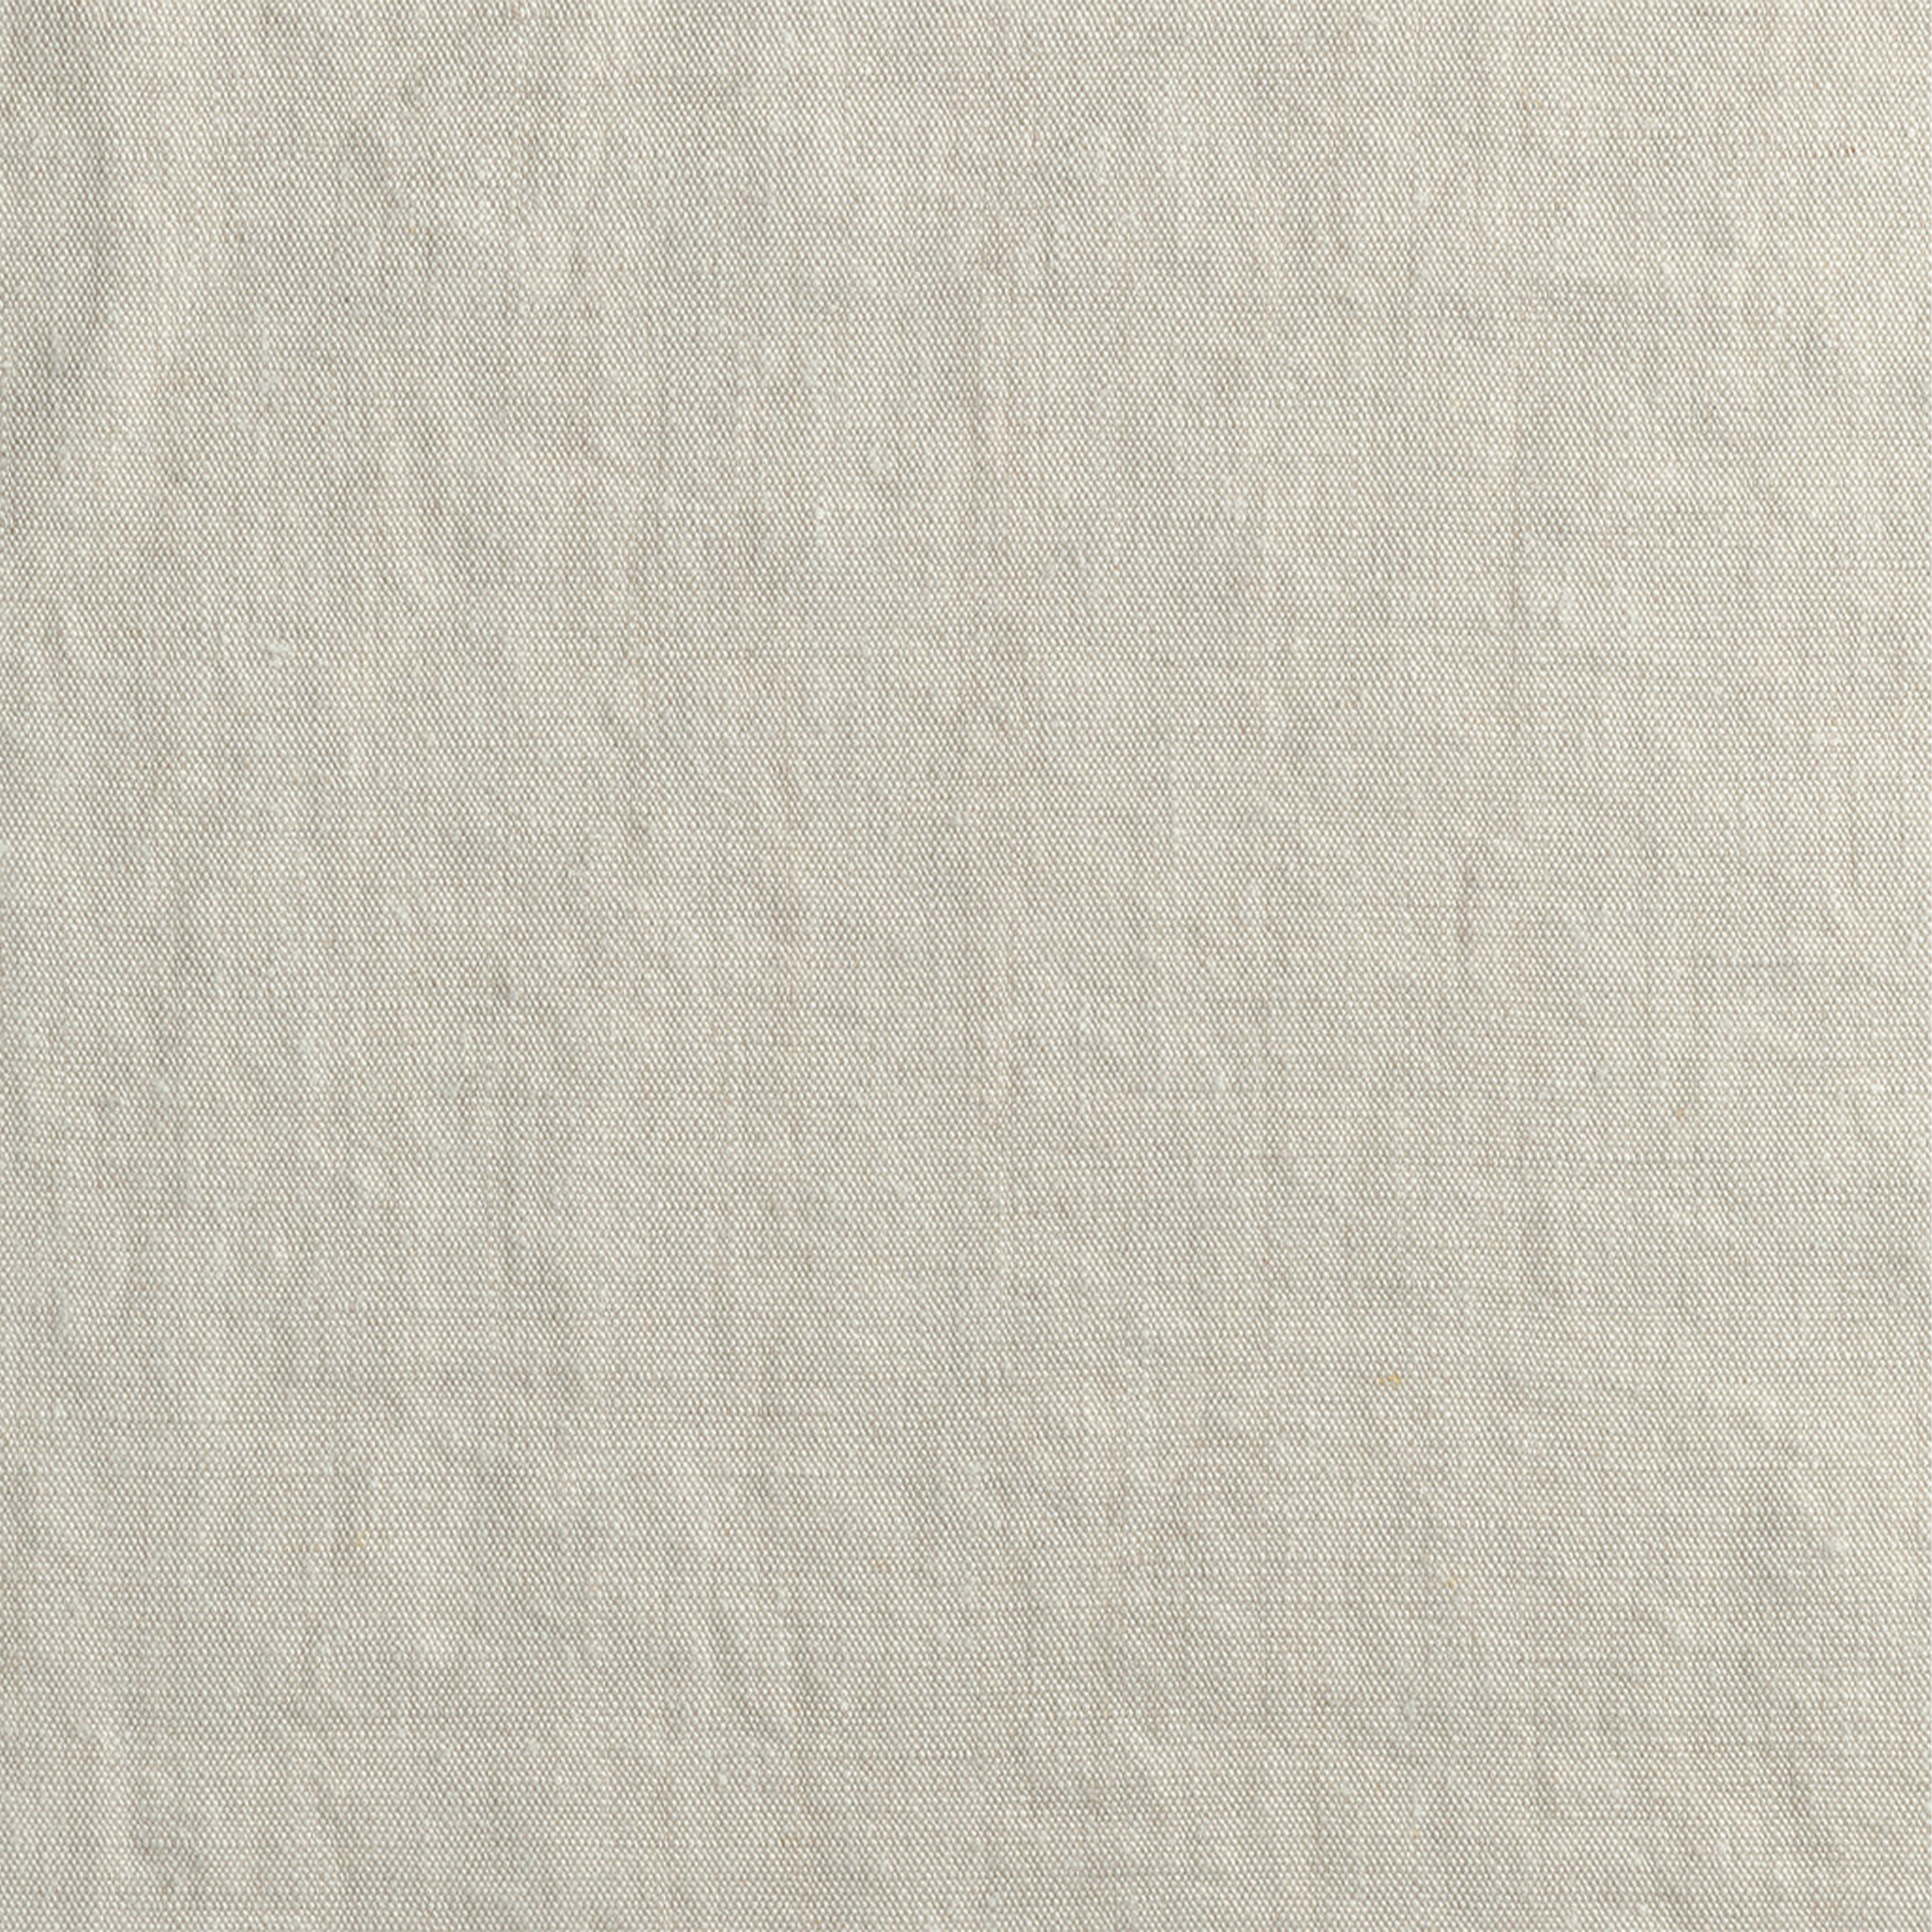 The image of an De La Cuona Seed Poppy Linen product